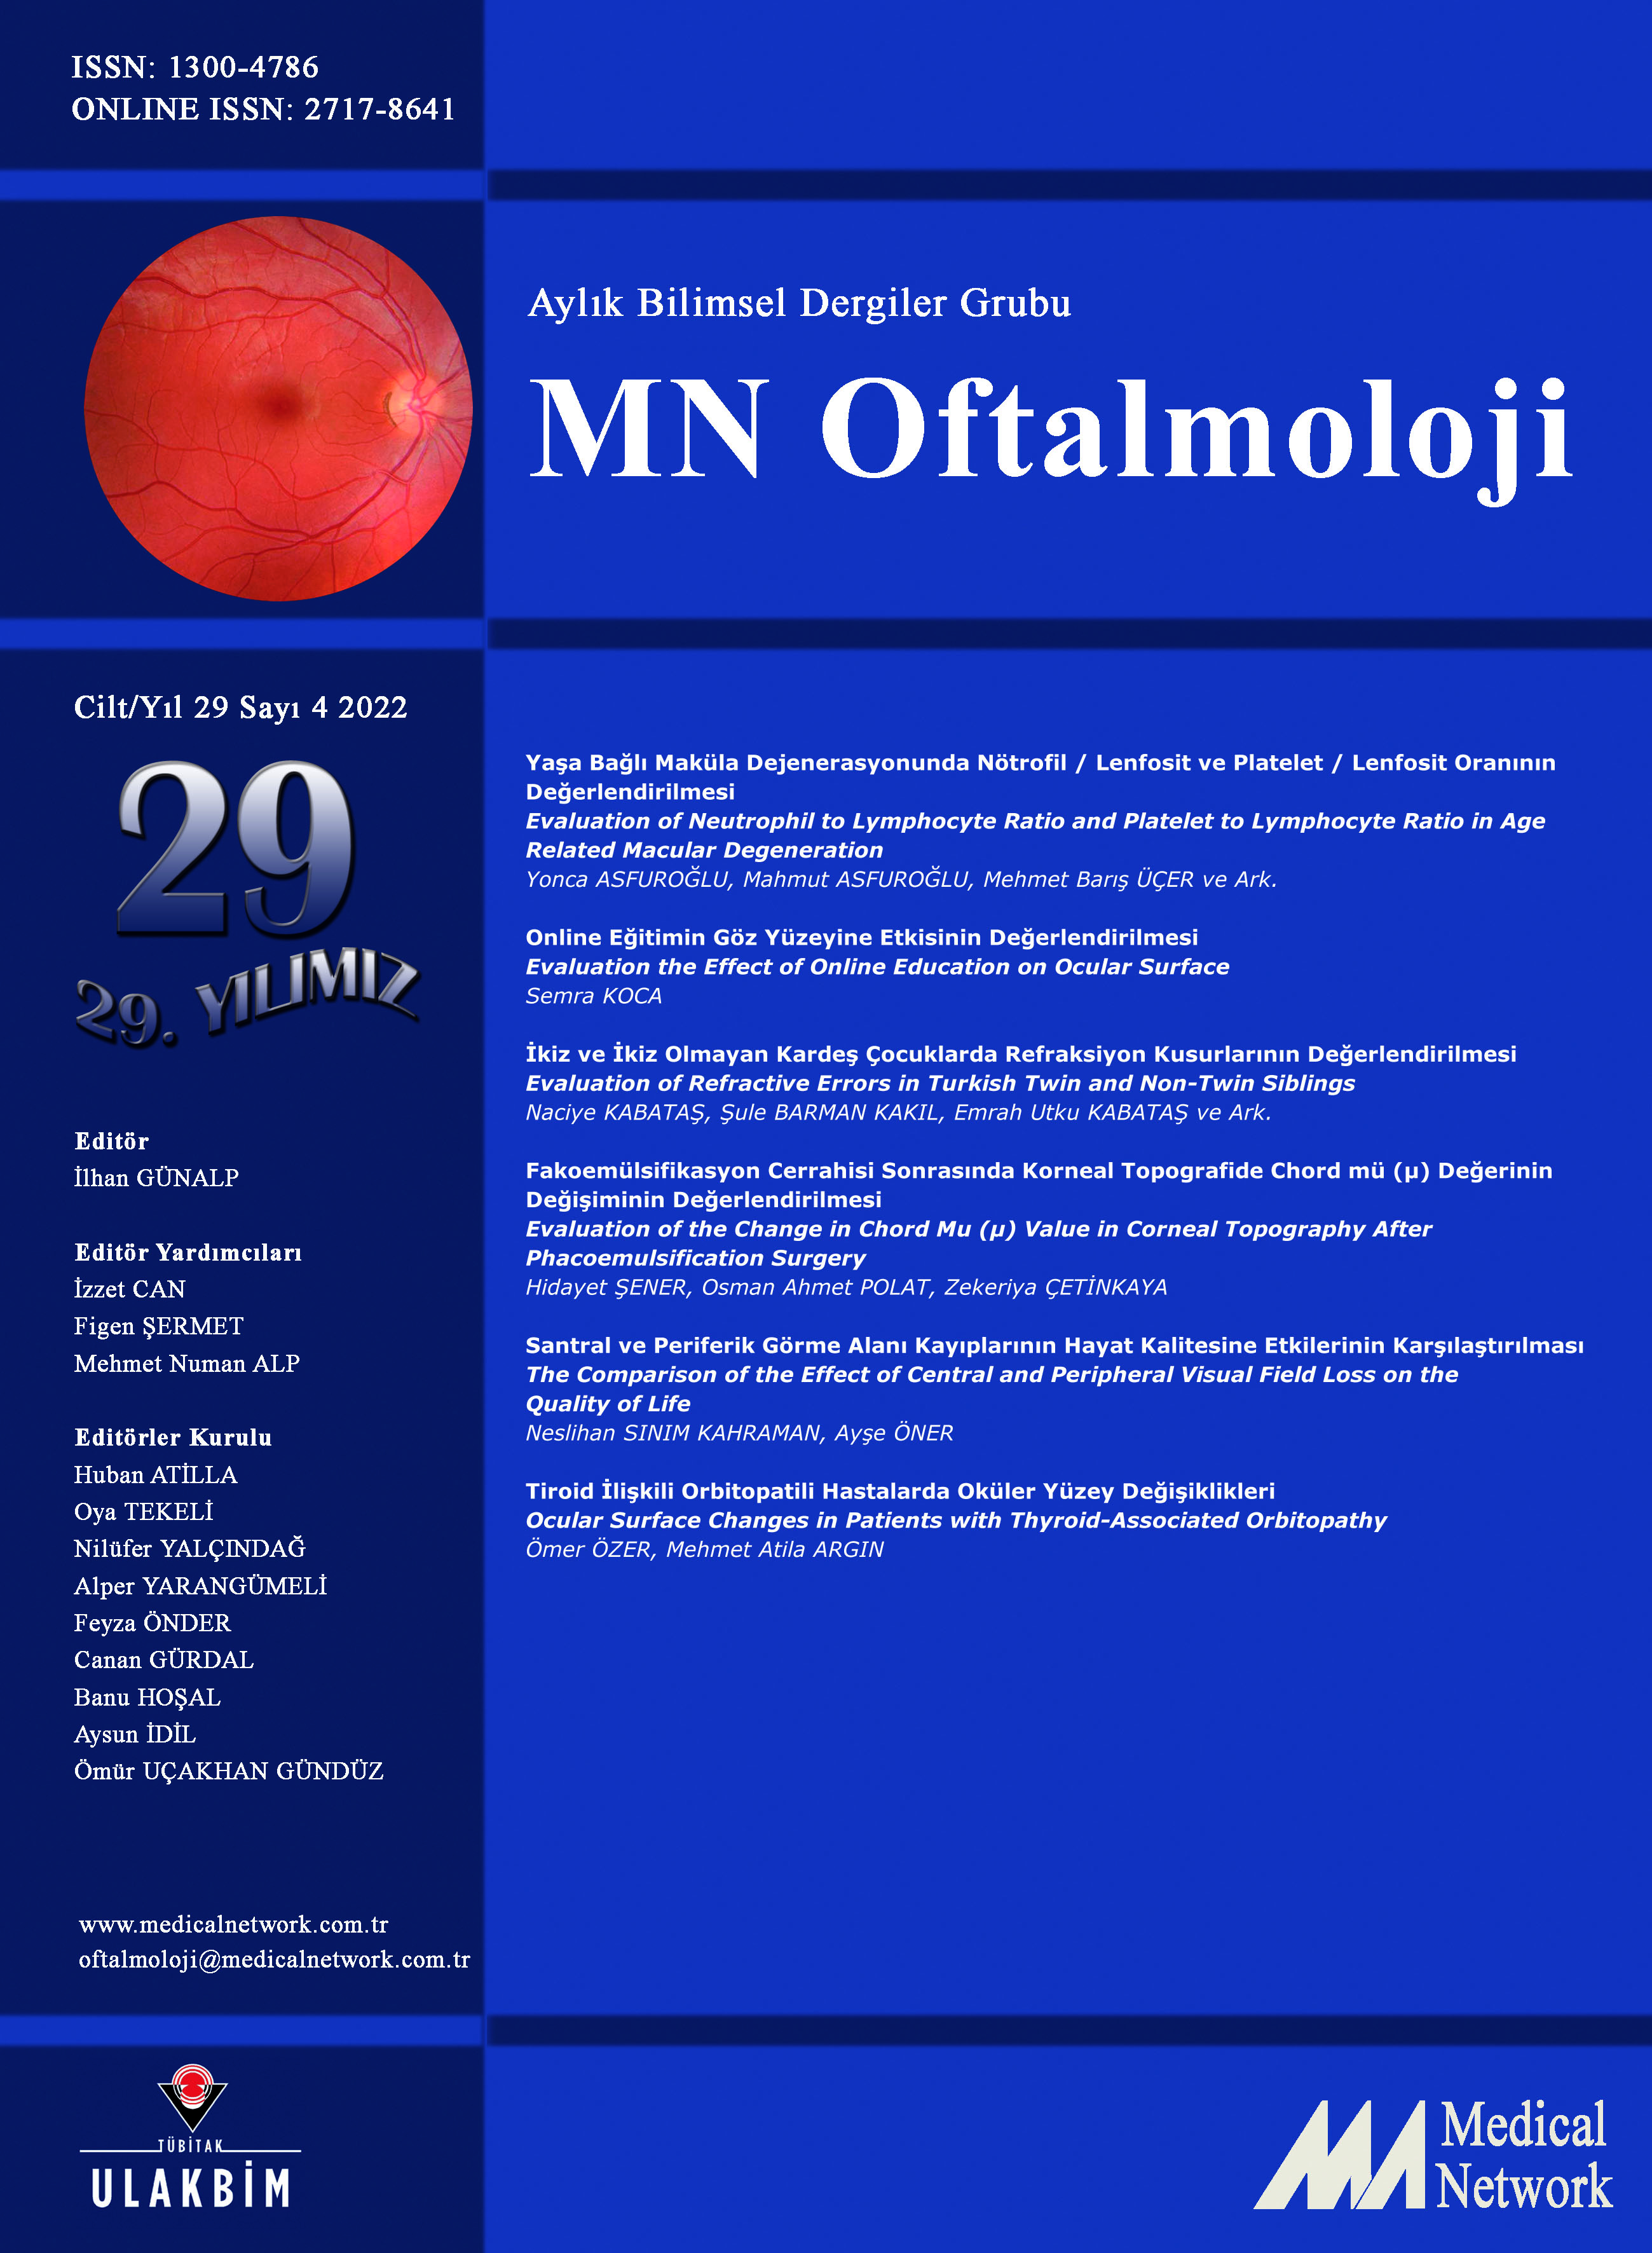 <p>MN Oftalmoloji Cilt: 29 Say: 4 2022 (MN Ophthalmology Volume: 29 No: 4 2022)</p>